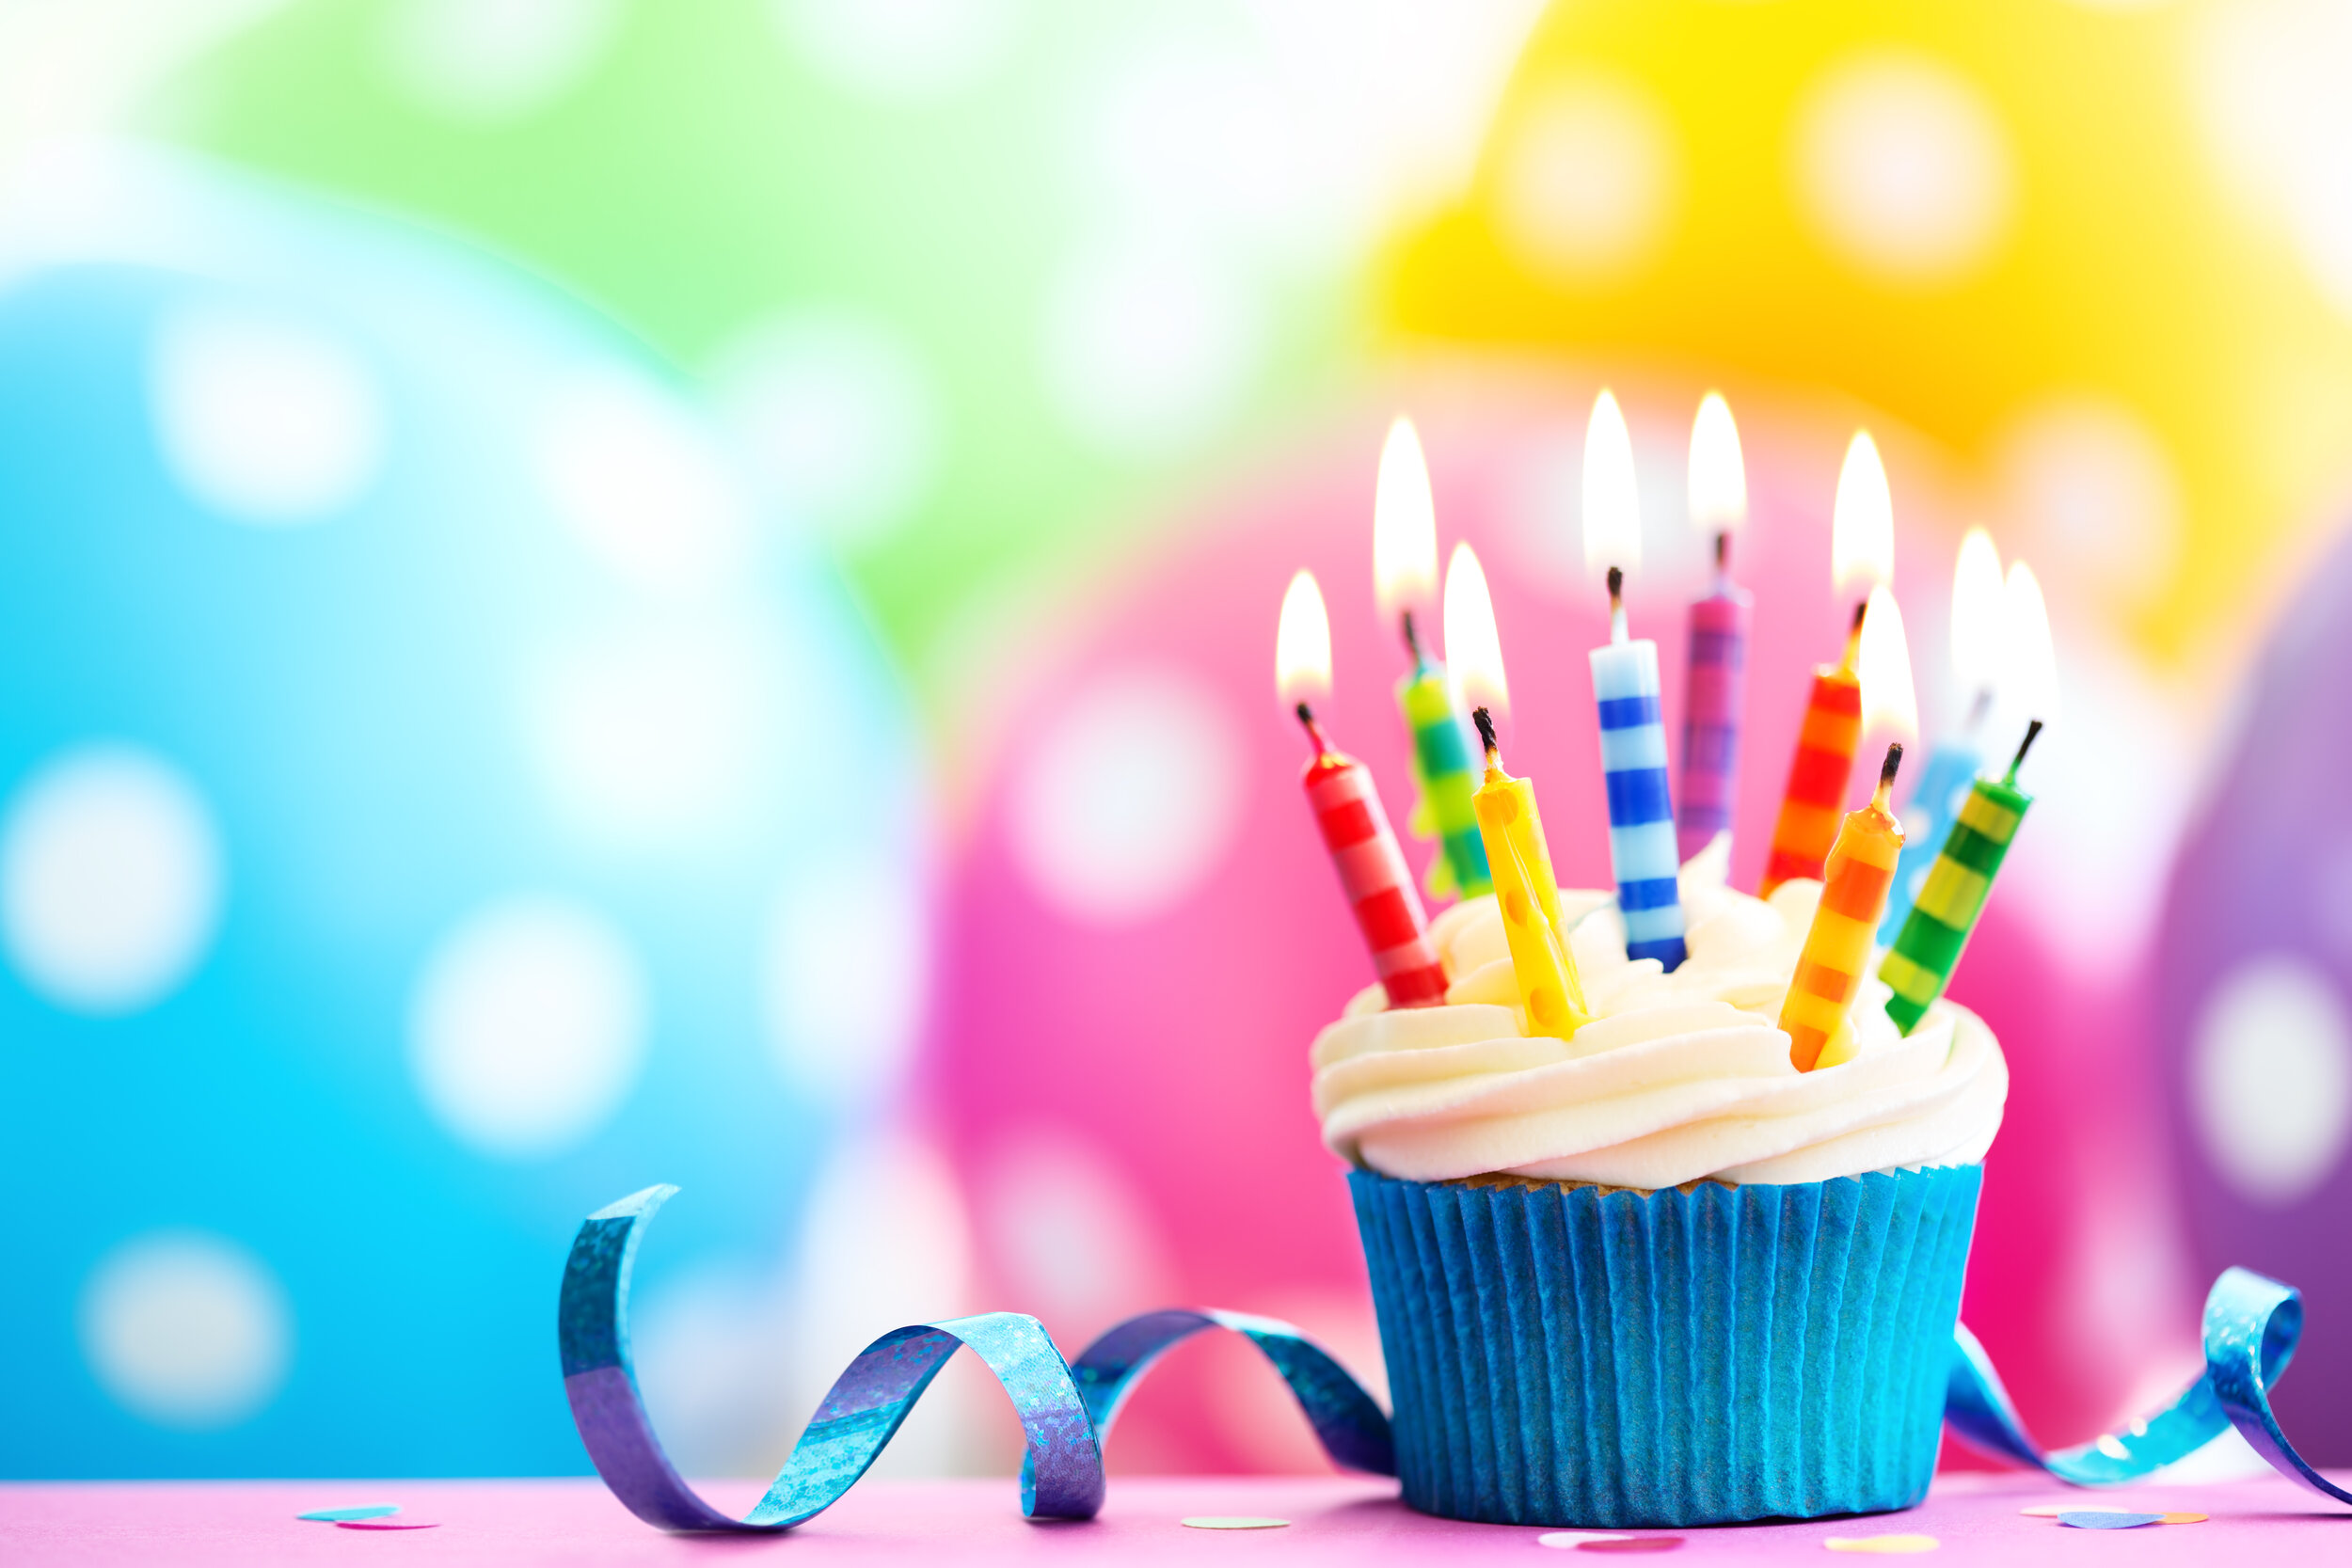 Birthday cupcake iStock-601920764.jpg.